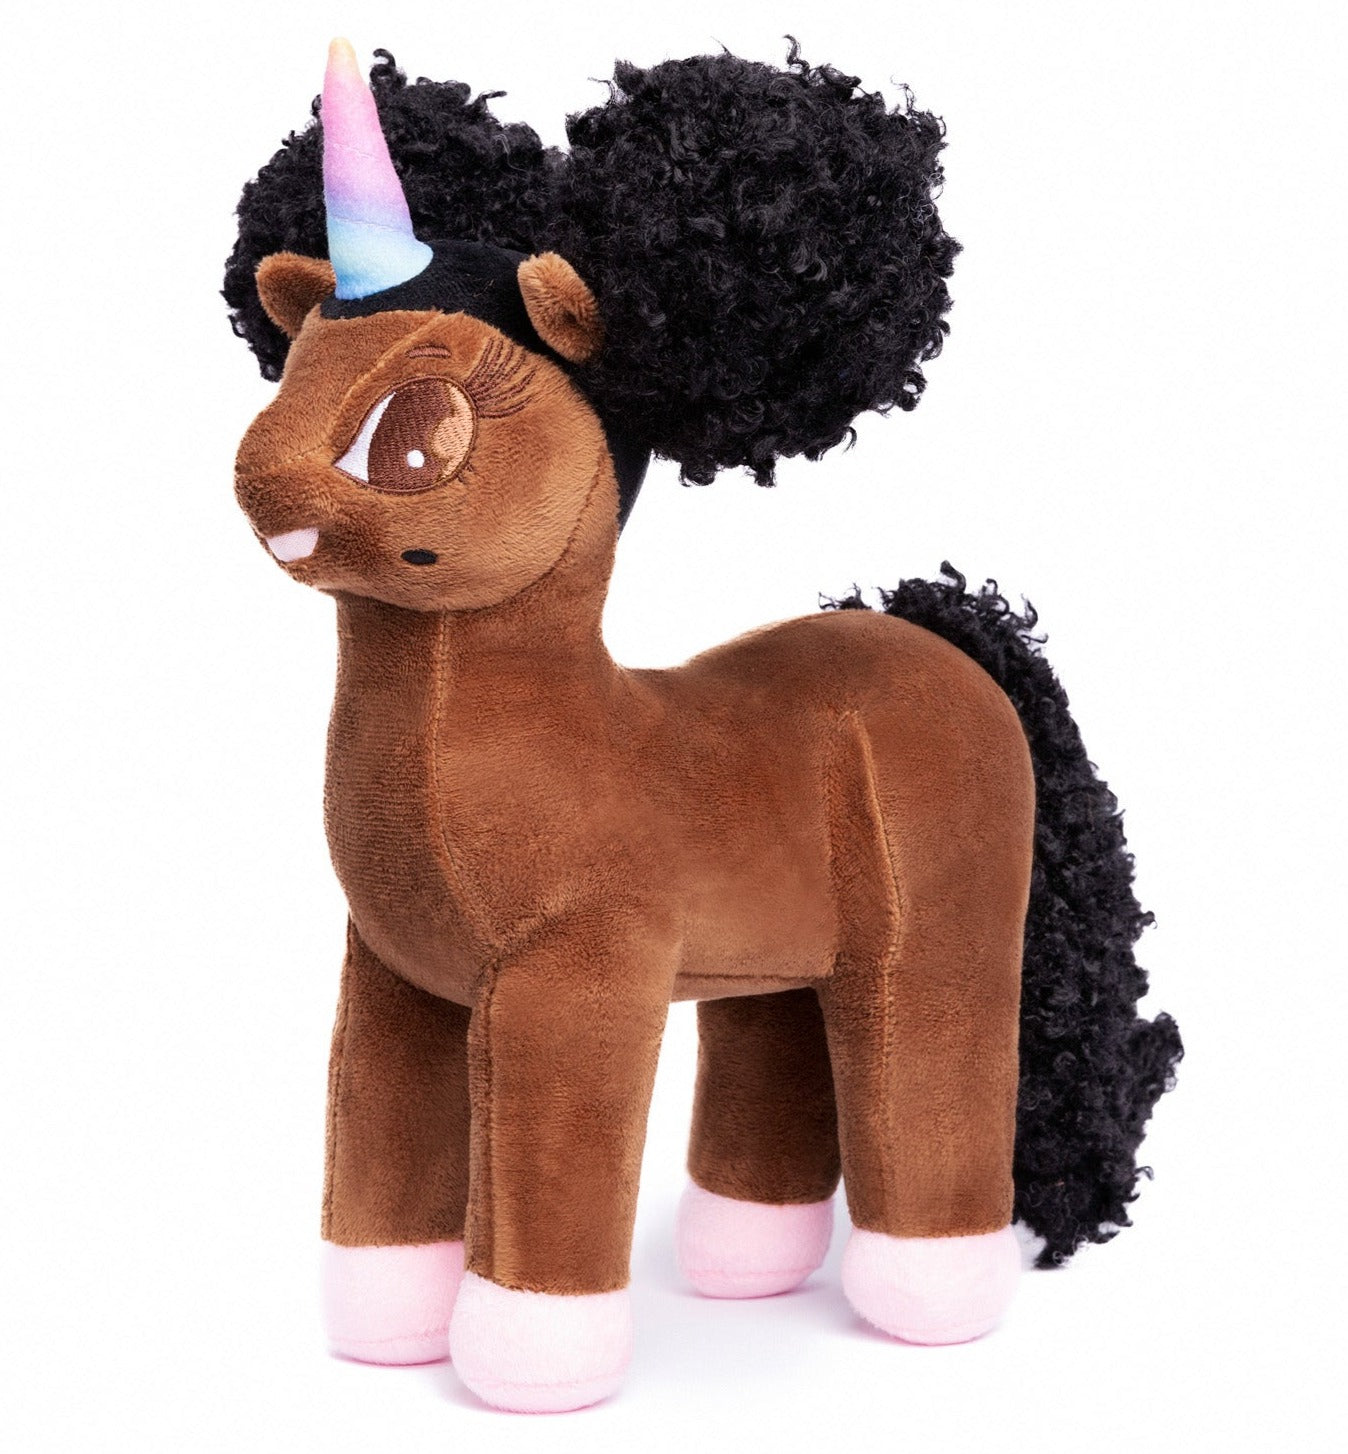 Armani Black Unicorn Plush Toy - 12 inch